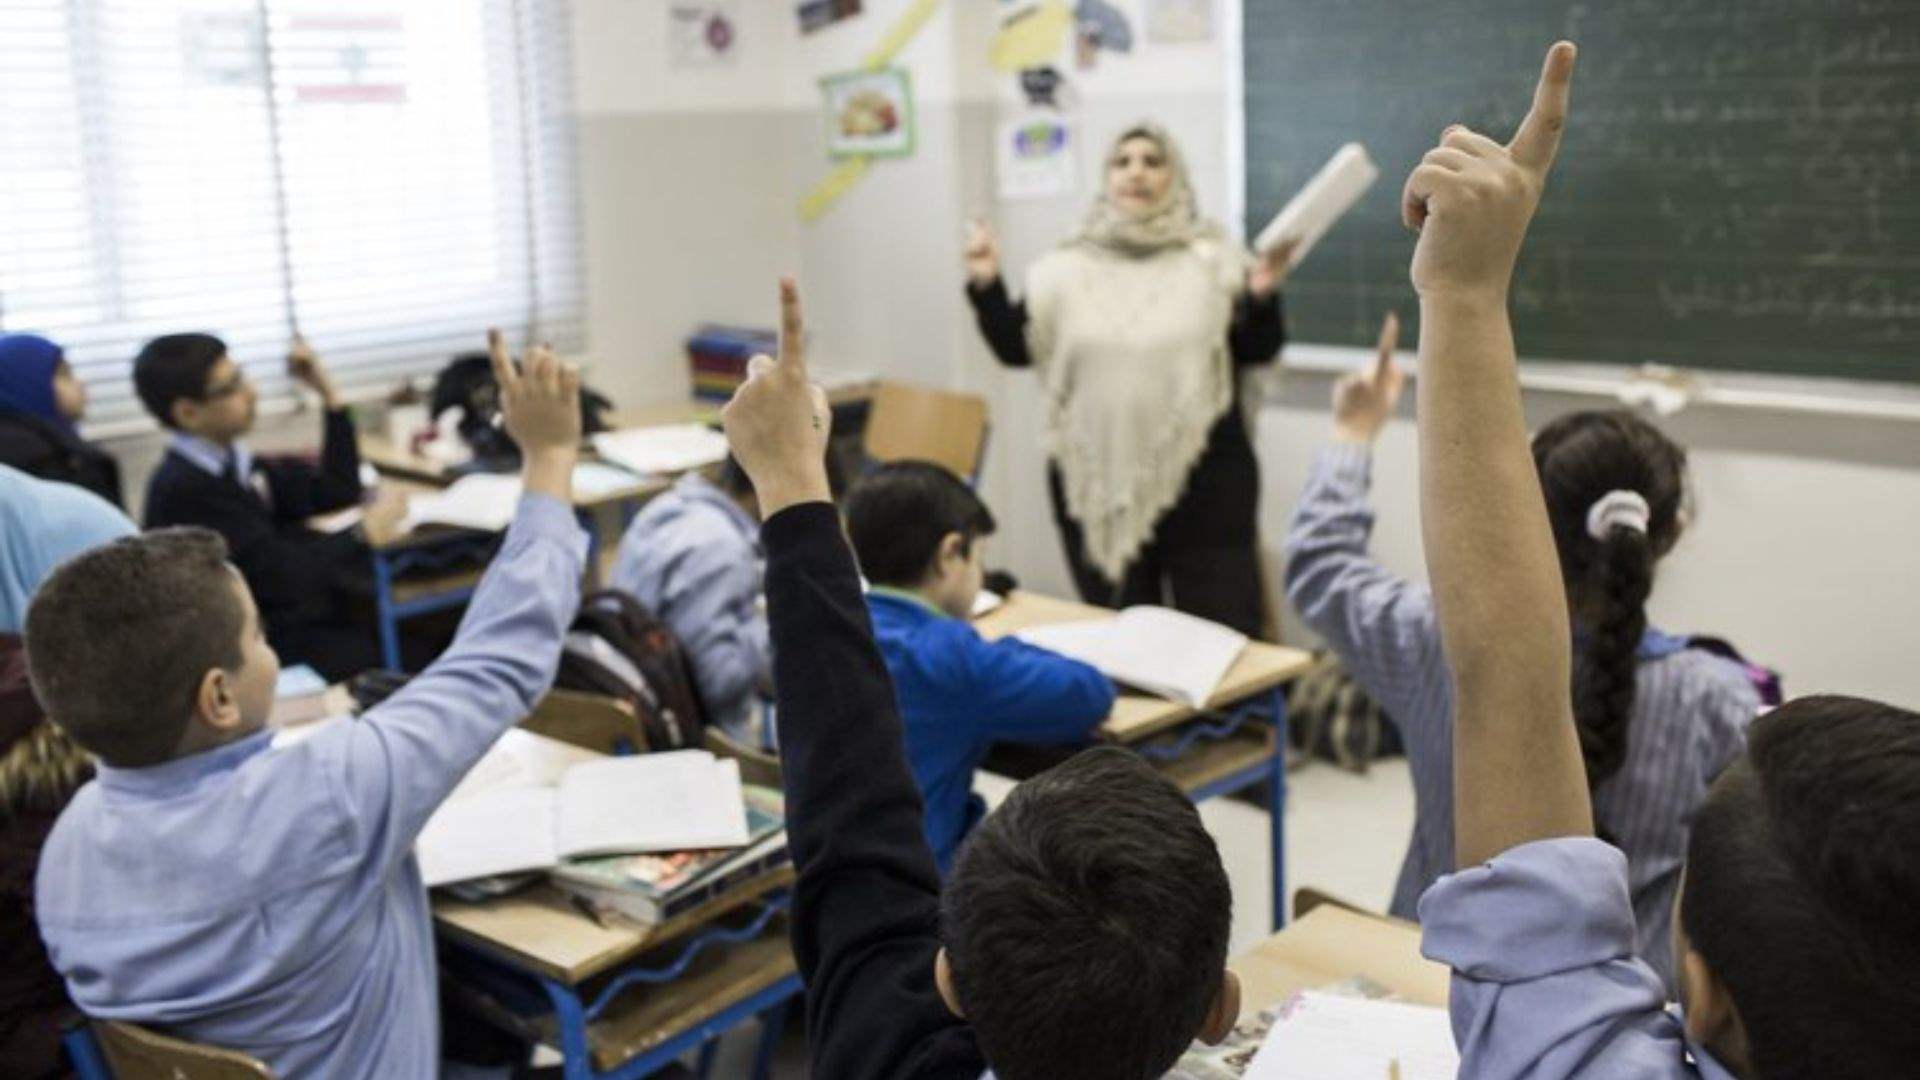 Public education in Lebanon at risk: report  